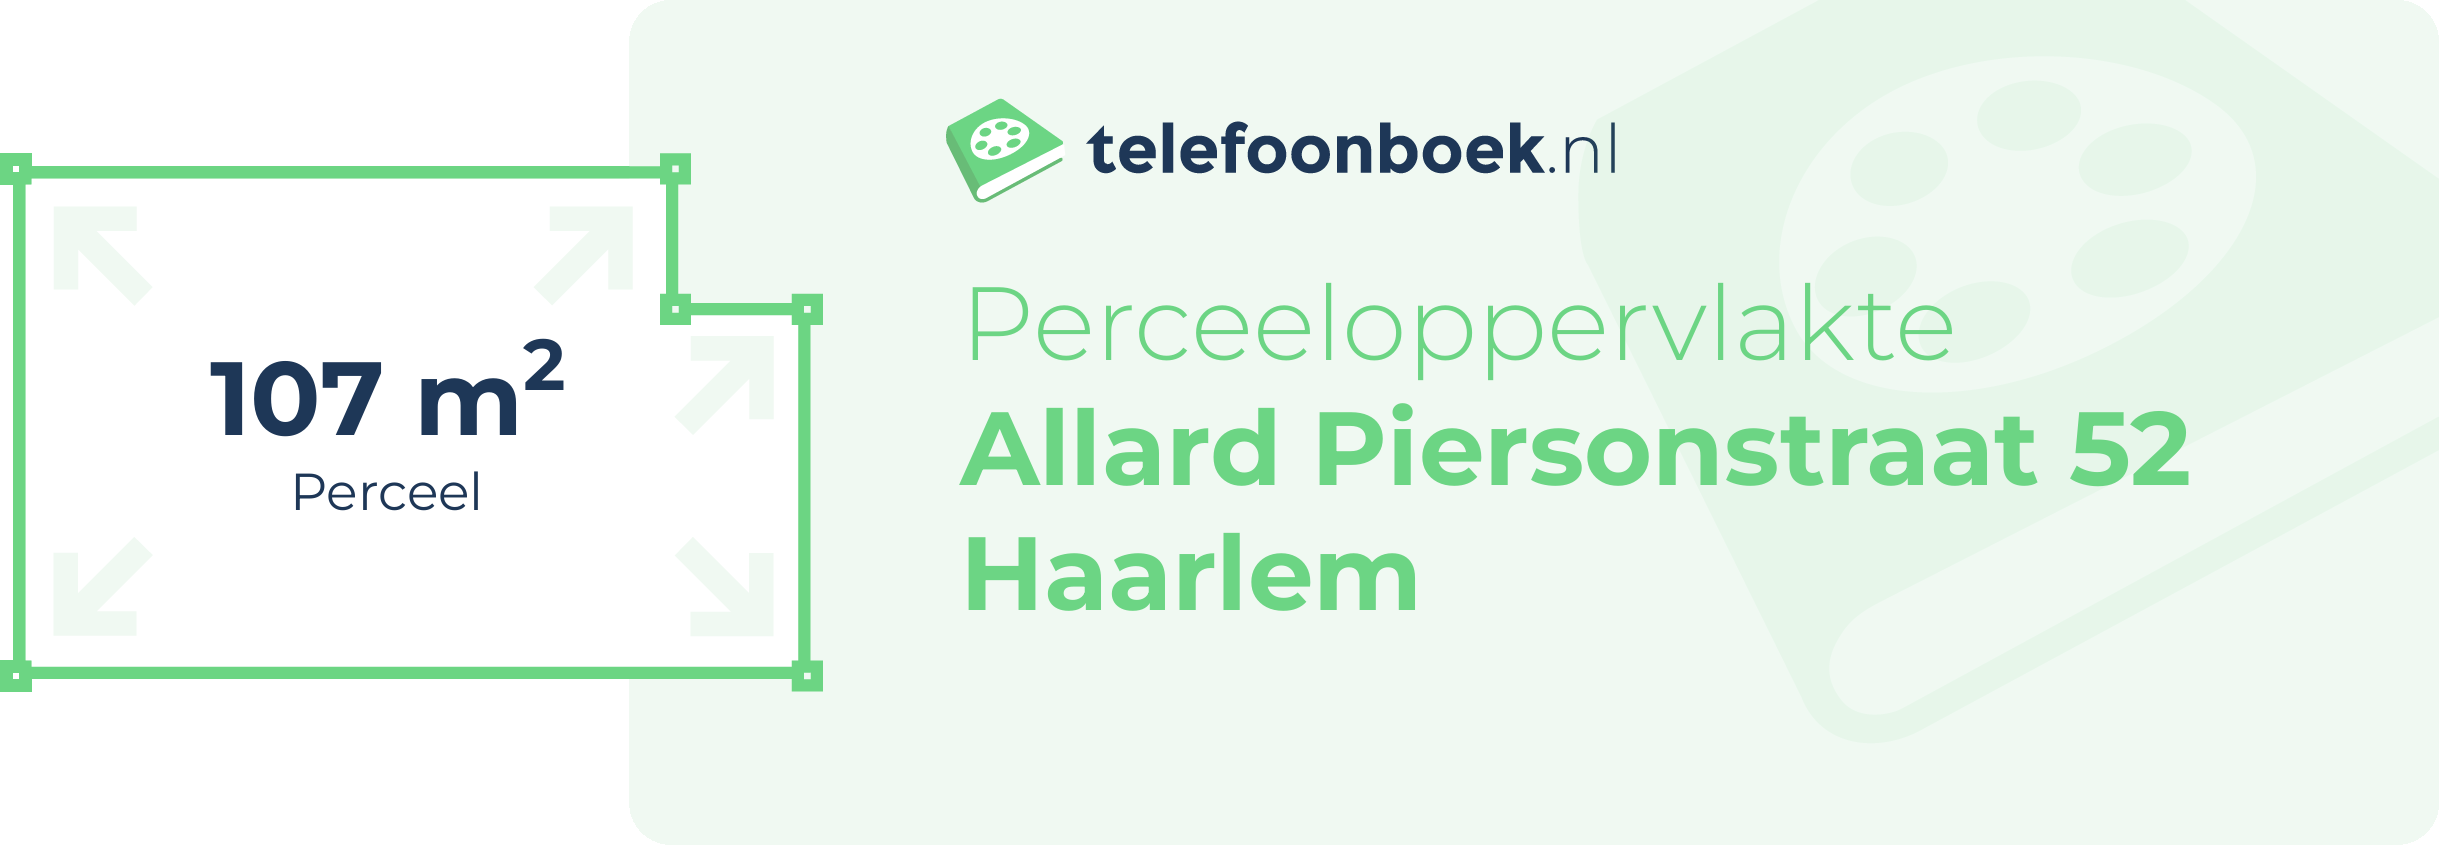 Perceeloppervlakte Allard Piersonstraat 52 Haarlem